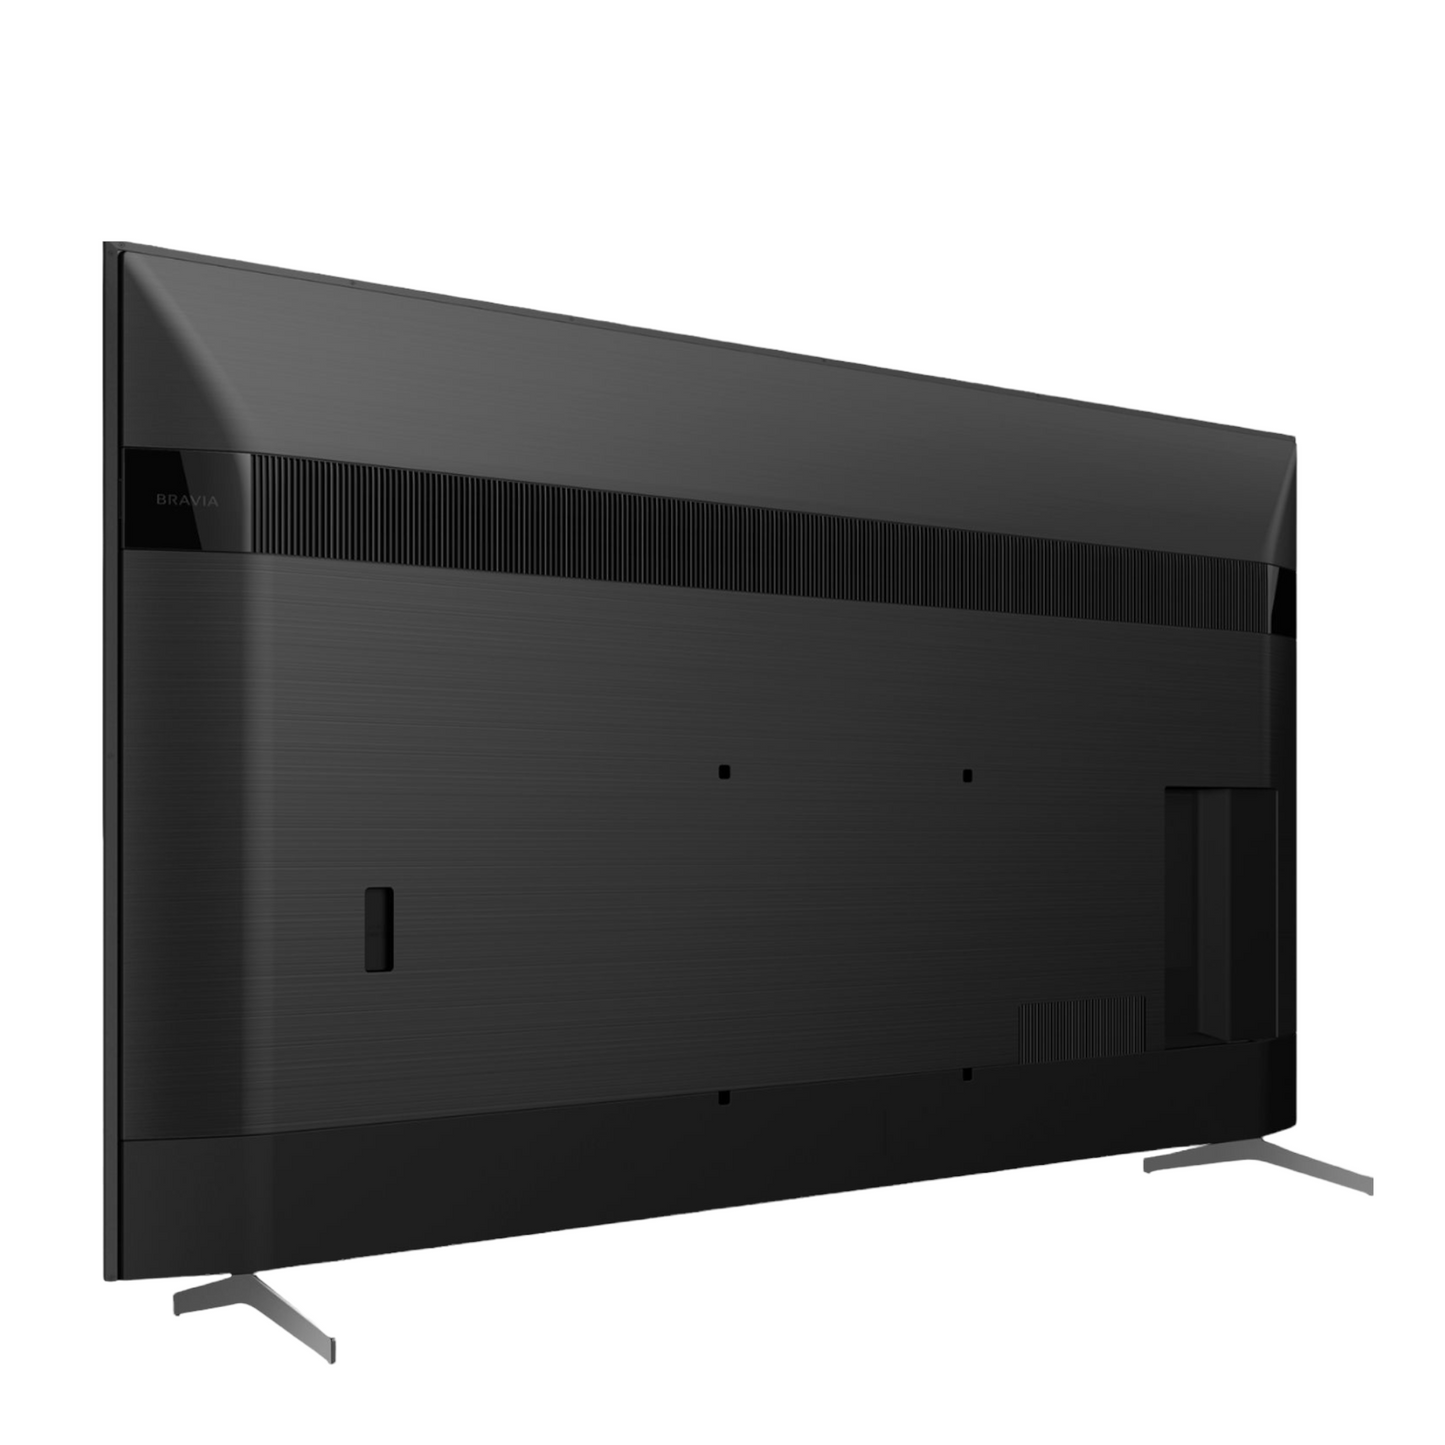 Sony - 85" Class X91J LED 4K UHD Smart Google TV